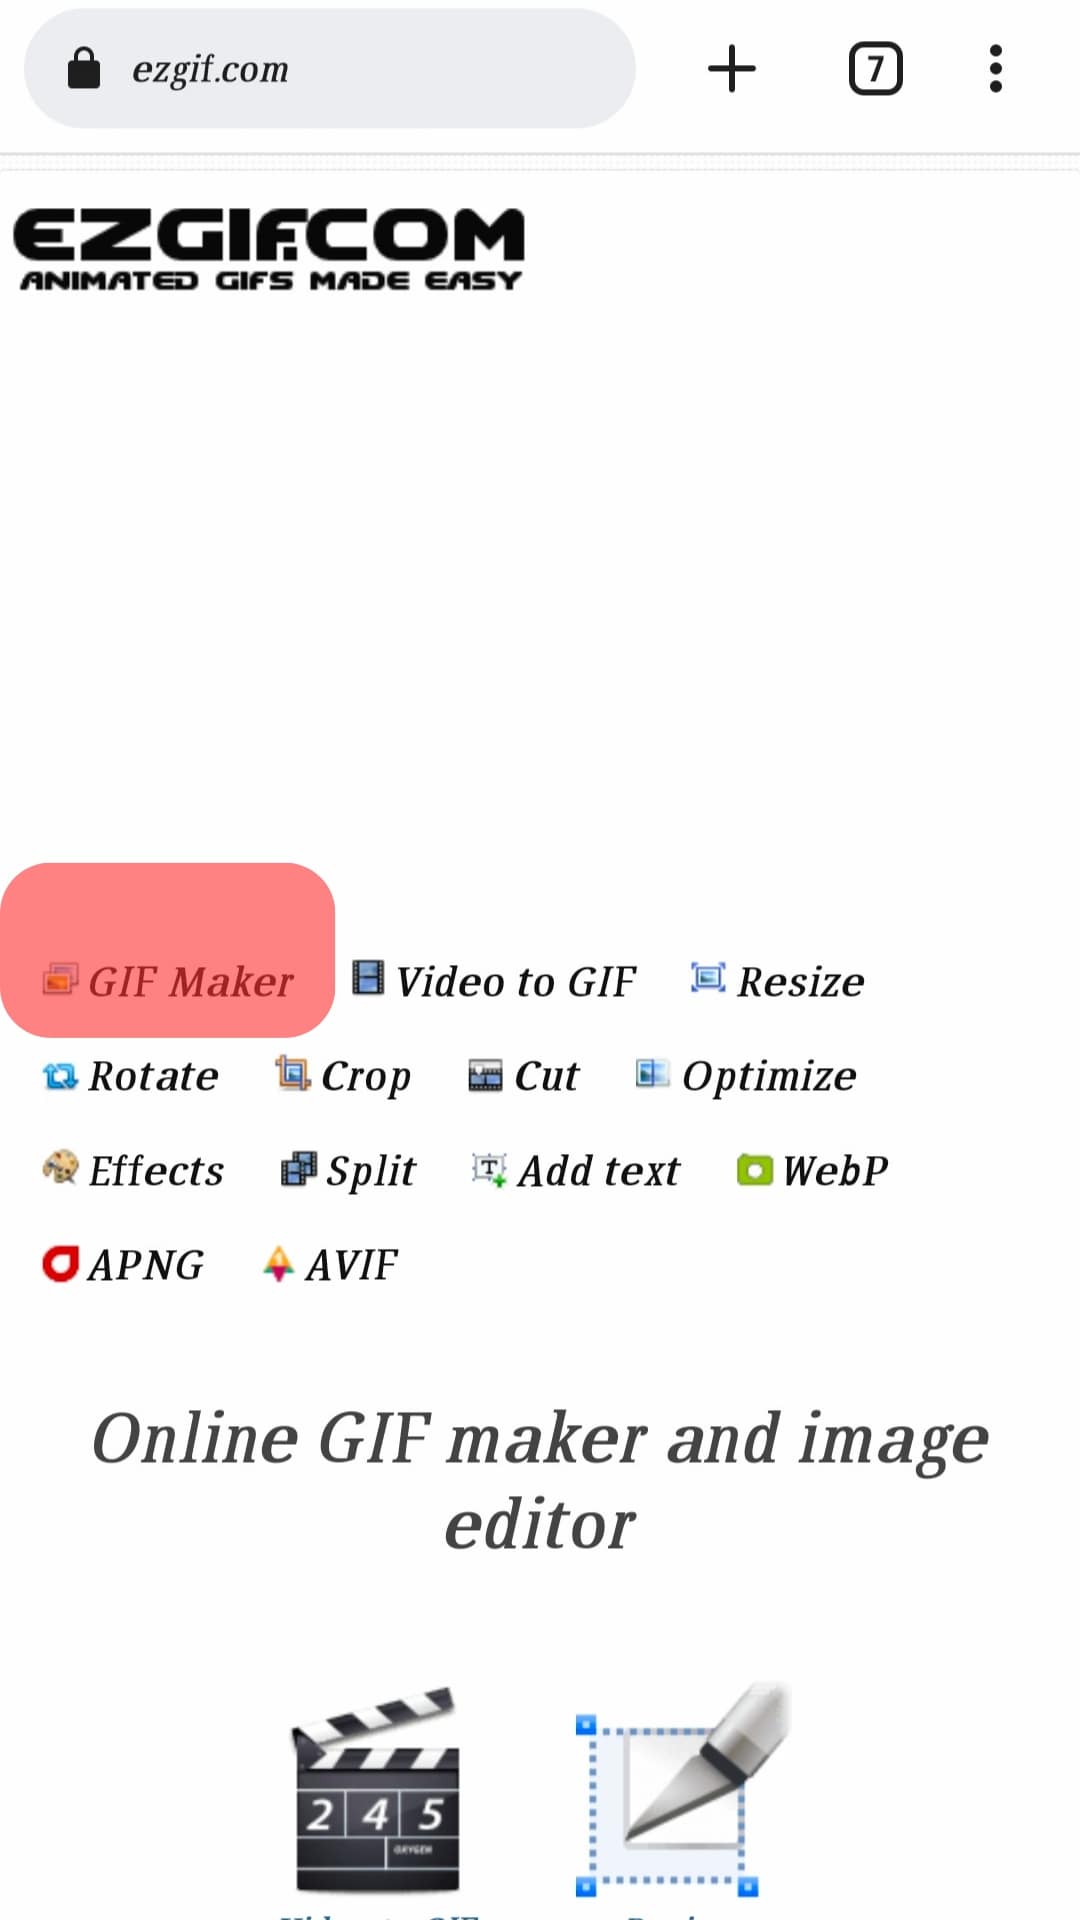 Click The Gif Maker Option